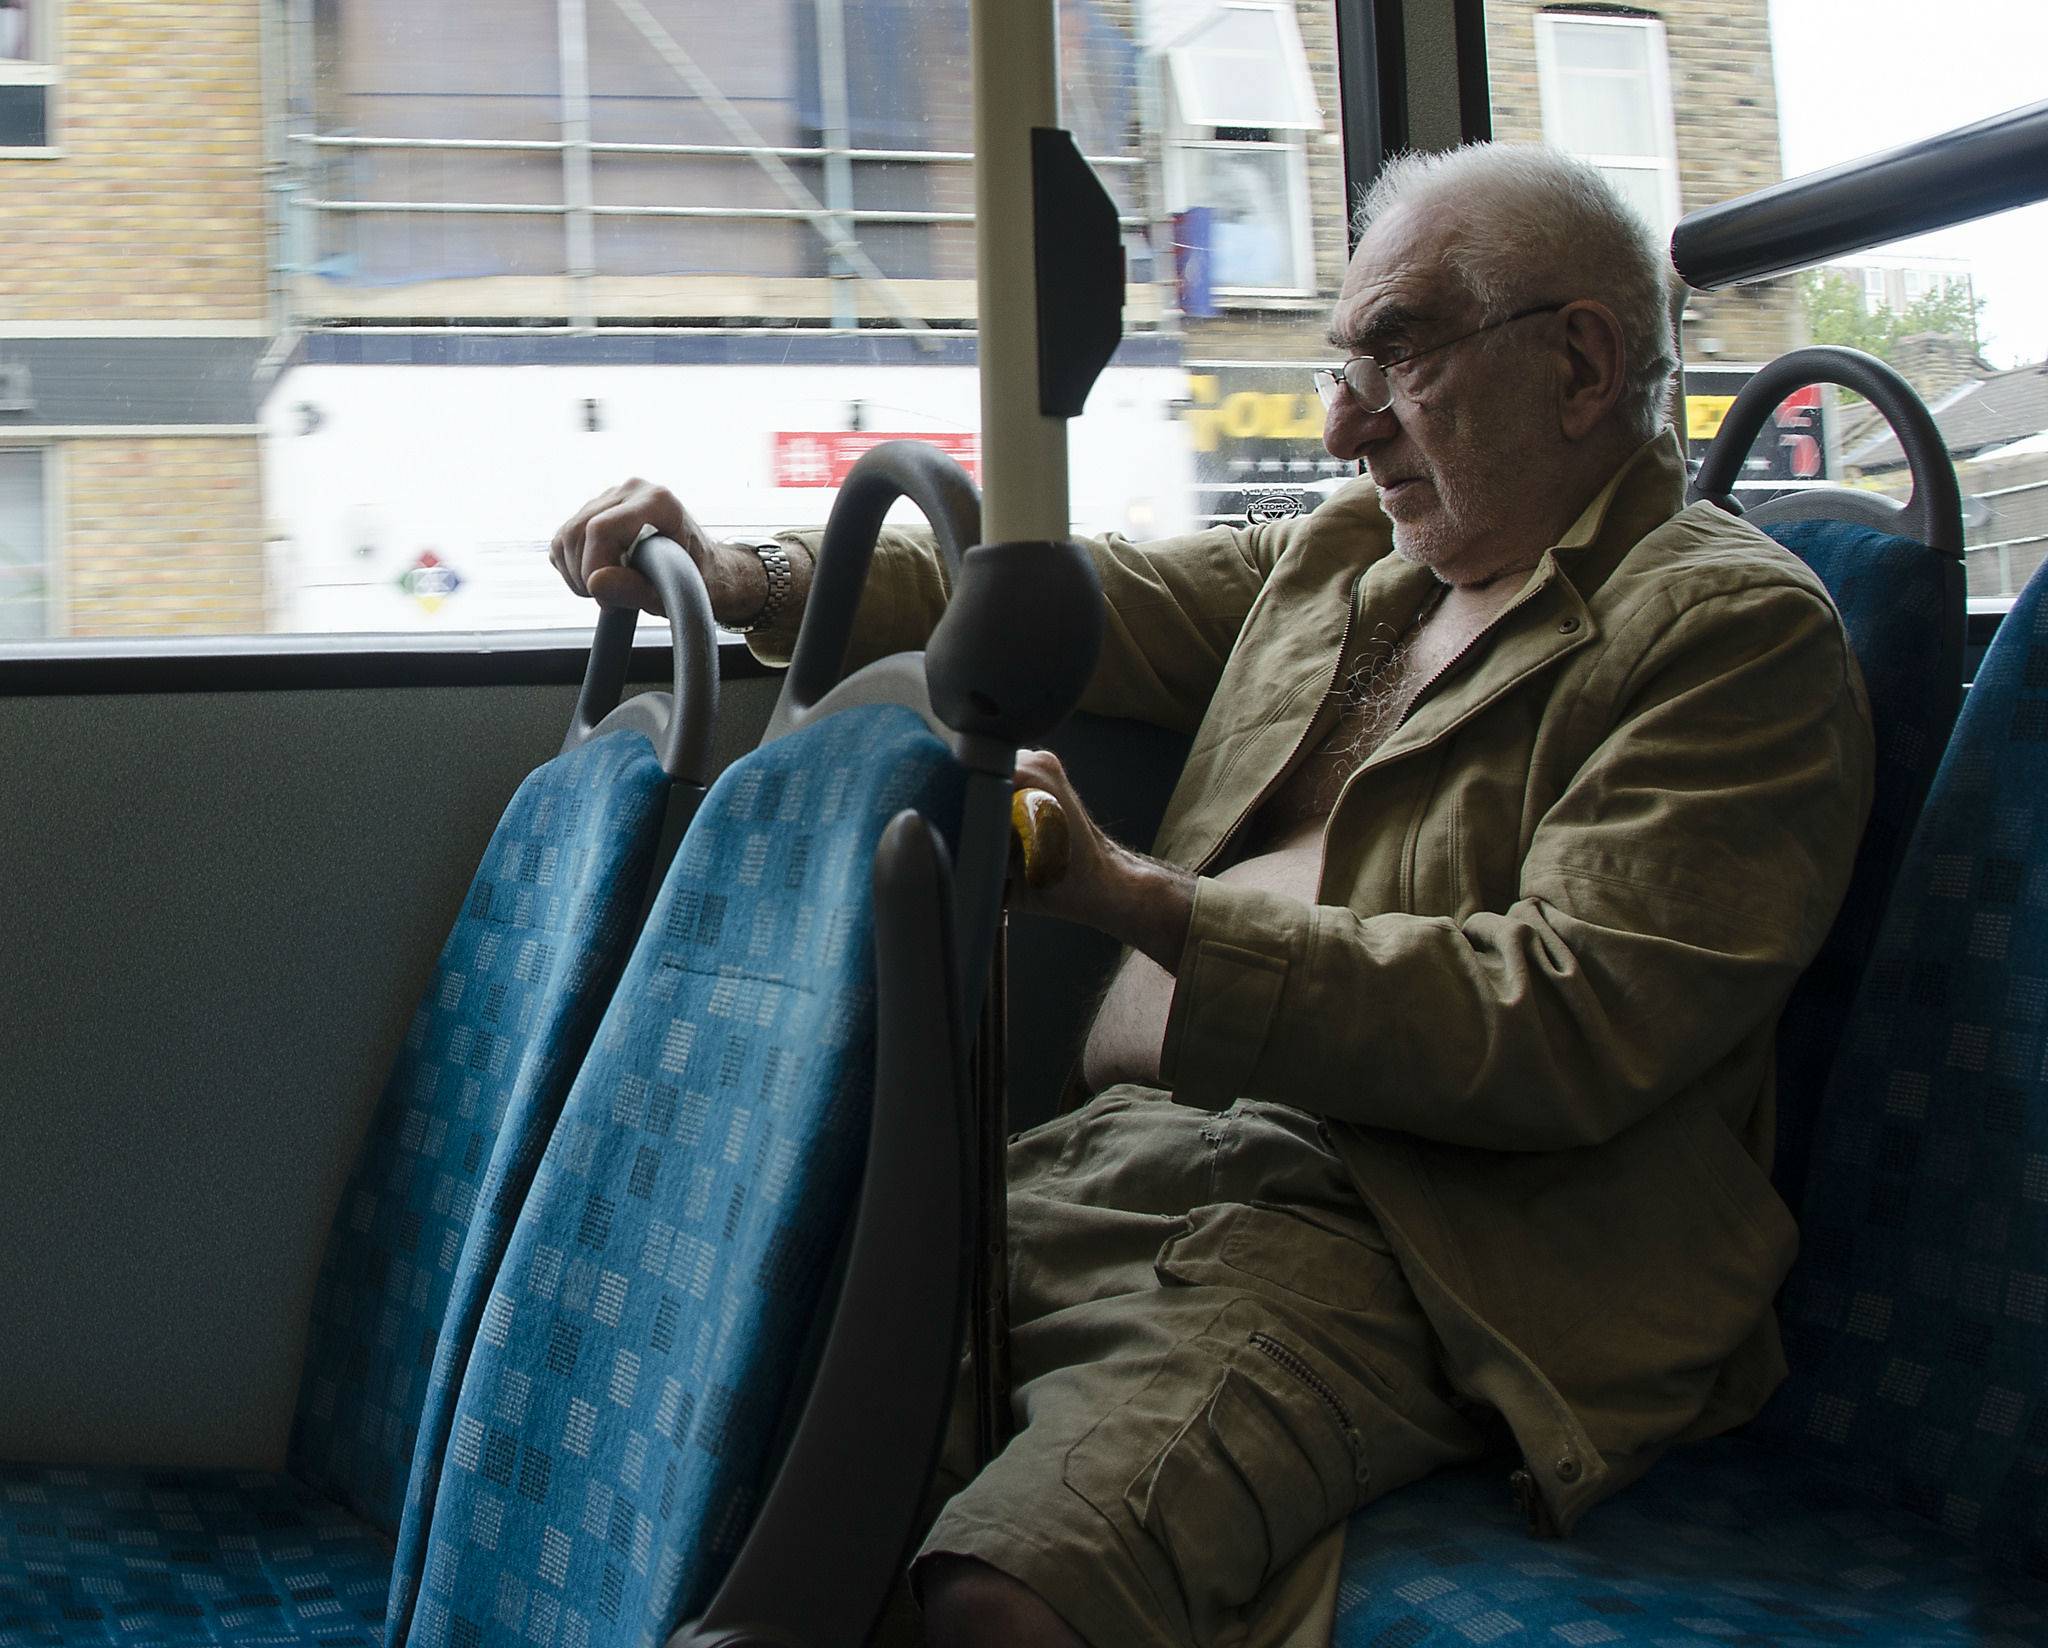 UK public transport letting down the elderly